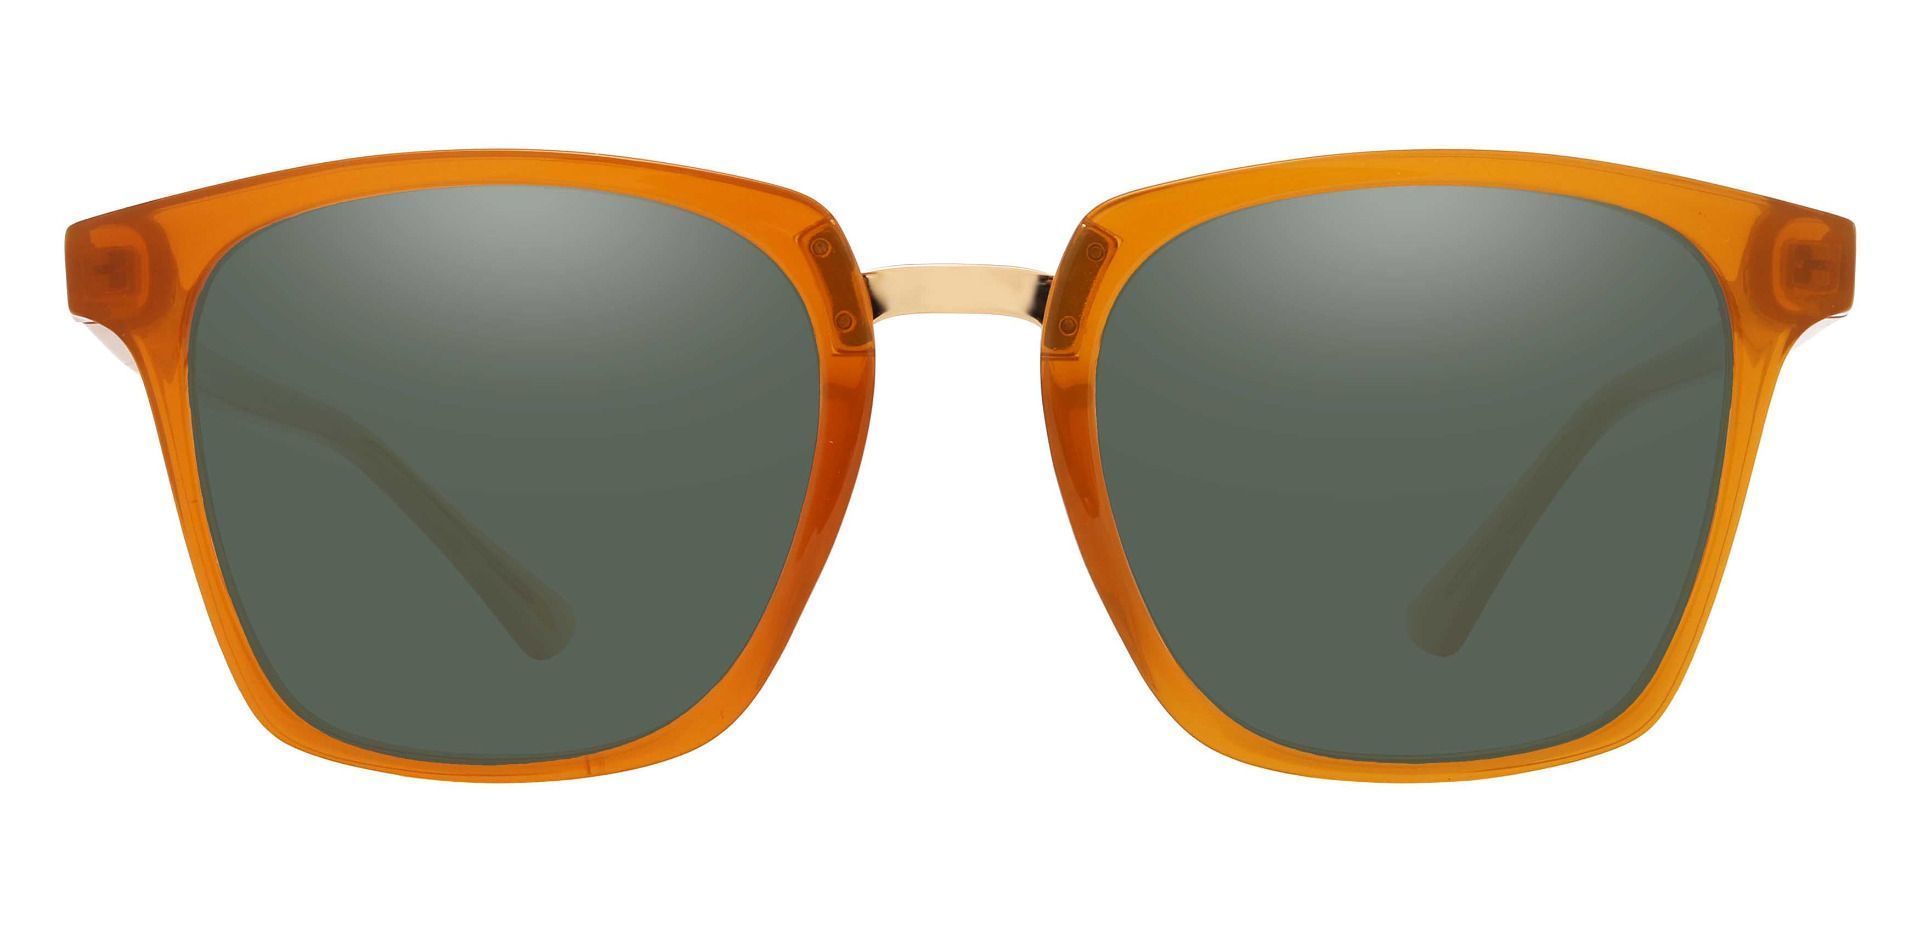 Delta Square Progressive Sunglasses - Orange Frame With Green Lenses